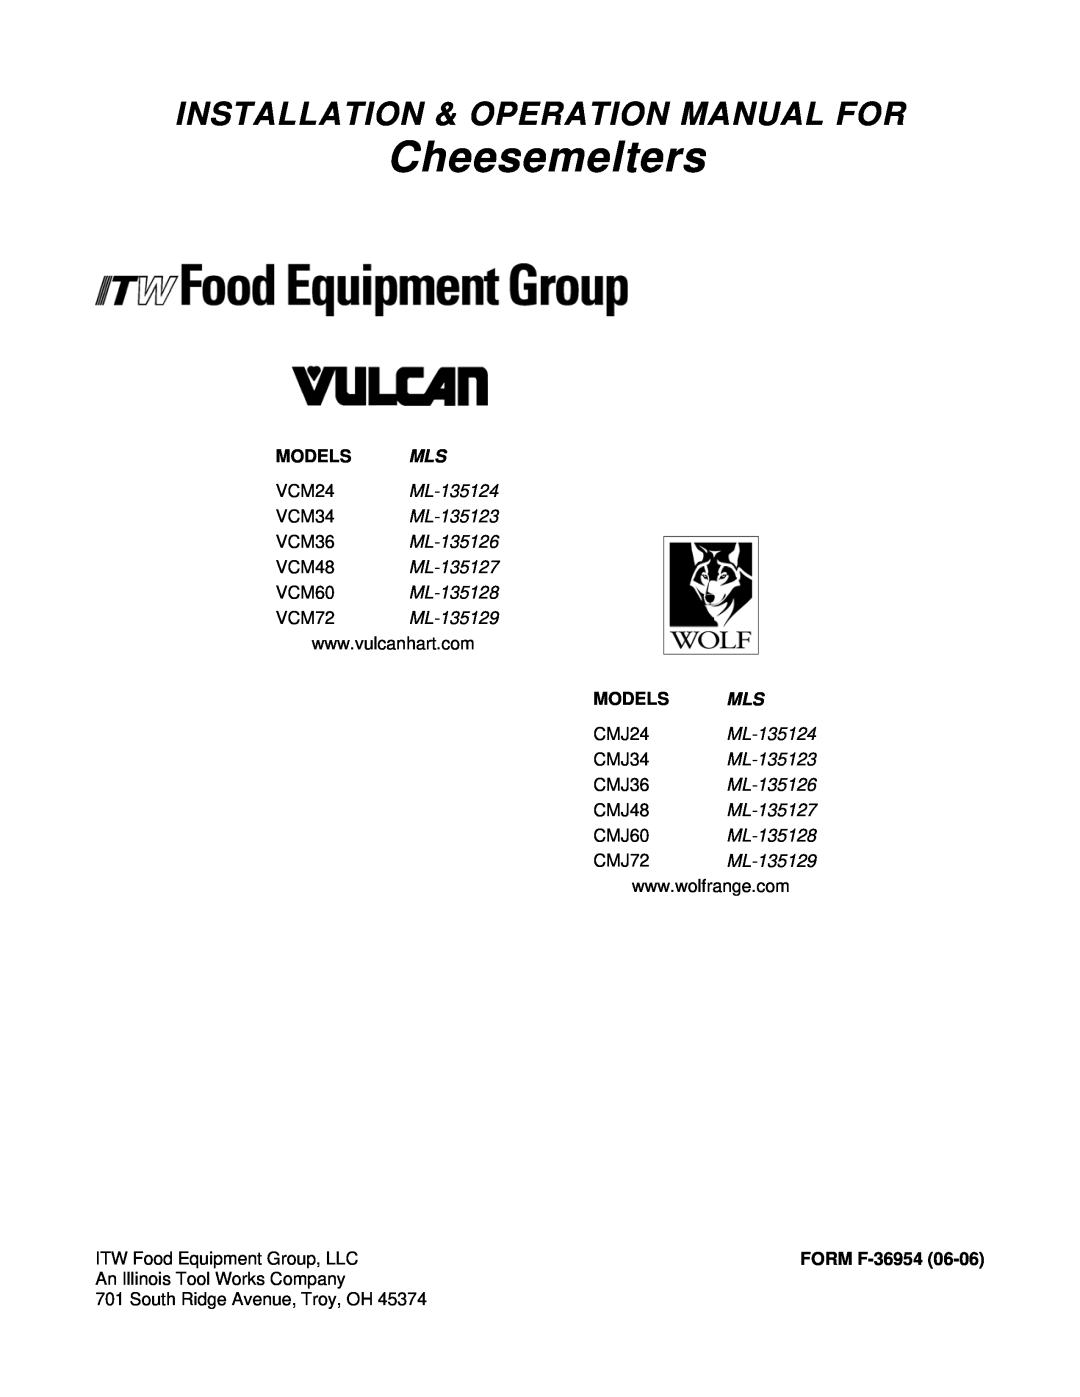 Vulcan-Hart VCM72 ML-135129 operation manual Cheesemelters, Models Mls, VCM24 ML-135124 VCM34 ML-135123 VCM36 ML-135126 